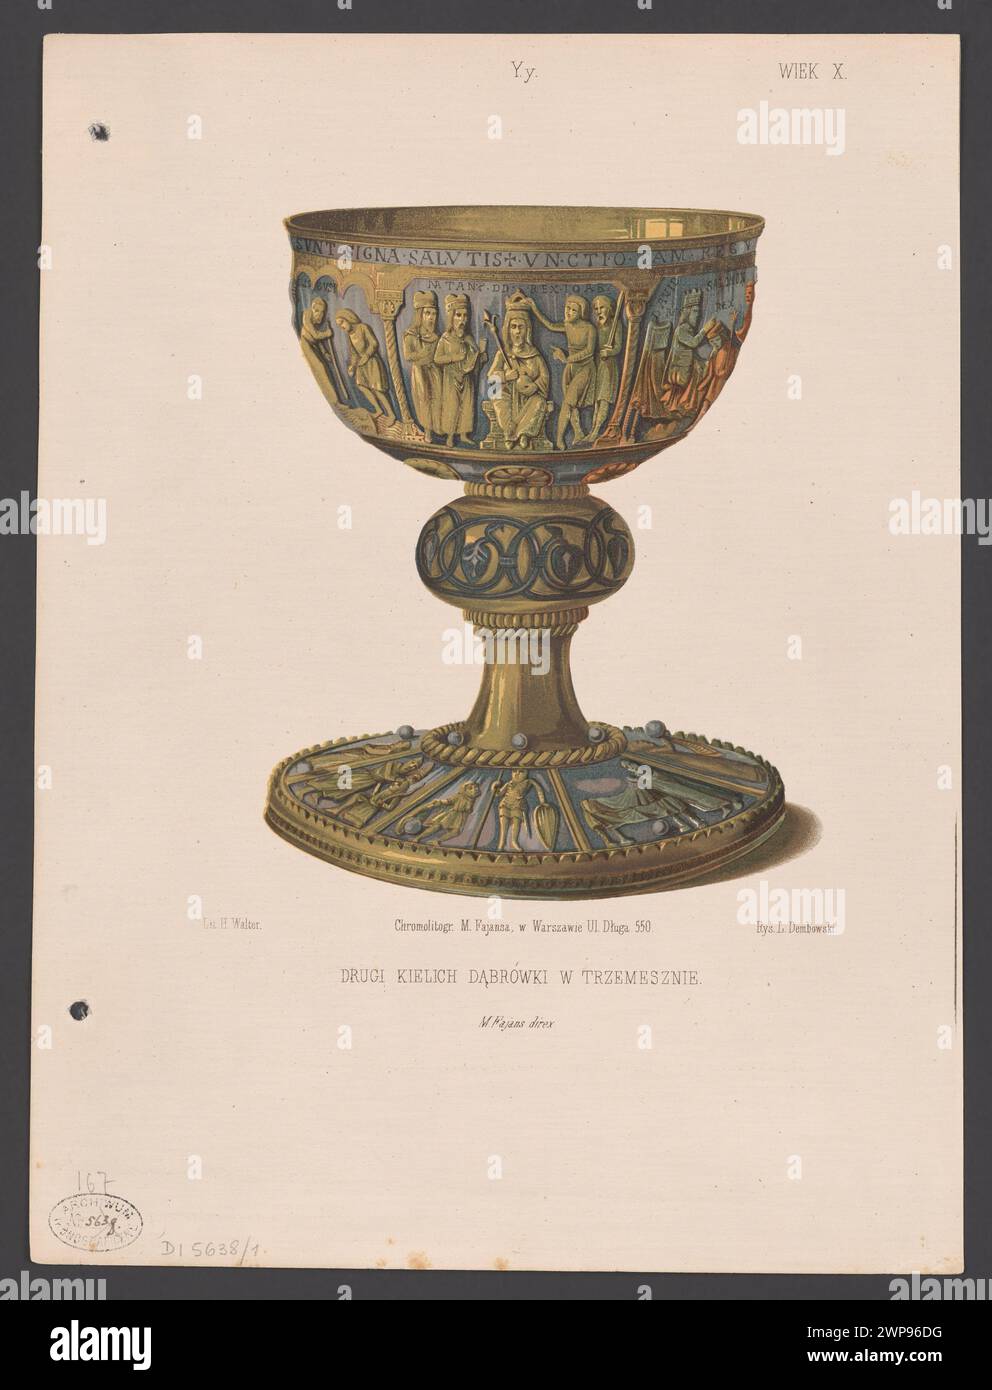 The second cup of Dziełki in Trzemeszno, il. Z: Aleksander Przedziecki, Edward Rastawiecki, 'Patterns of the Redium Art and from the Rebirth Age after the end of the 17th century in former Poland' (Warsaw, Paris, 1853-1855), Series 1, z. XXI, tab. Xy; Dembowski, Leon (1823-1904), Walter, H., Fajans, Maksymilian (Warsaw; lithographic and photographic inn; 1853-1892), Fajans, Maksymilian (1825-1890), Przedziecki, Aleksander (1814-1871), Rastawiecki, Edward (1804-1874), Unger, Józef (Warsaw; Drukarnia, Publisher, Ksi Garnia; 1841-Ca 1877); 1853-1855 (1853-00-00-1855-00-00); Stock Photo